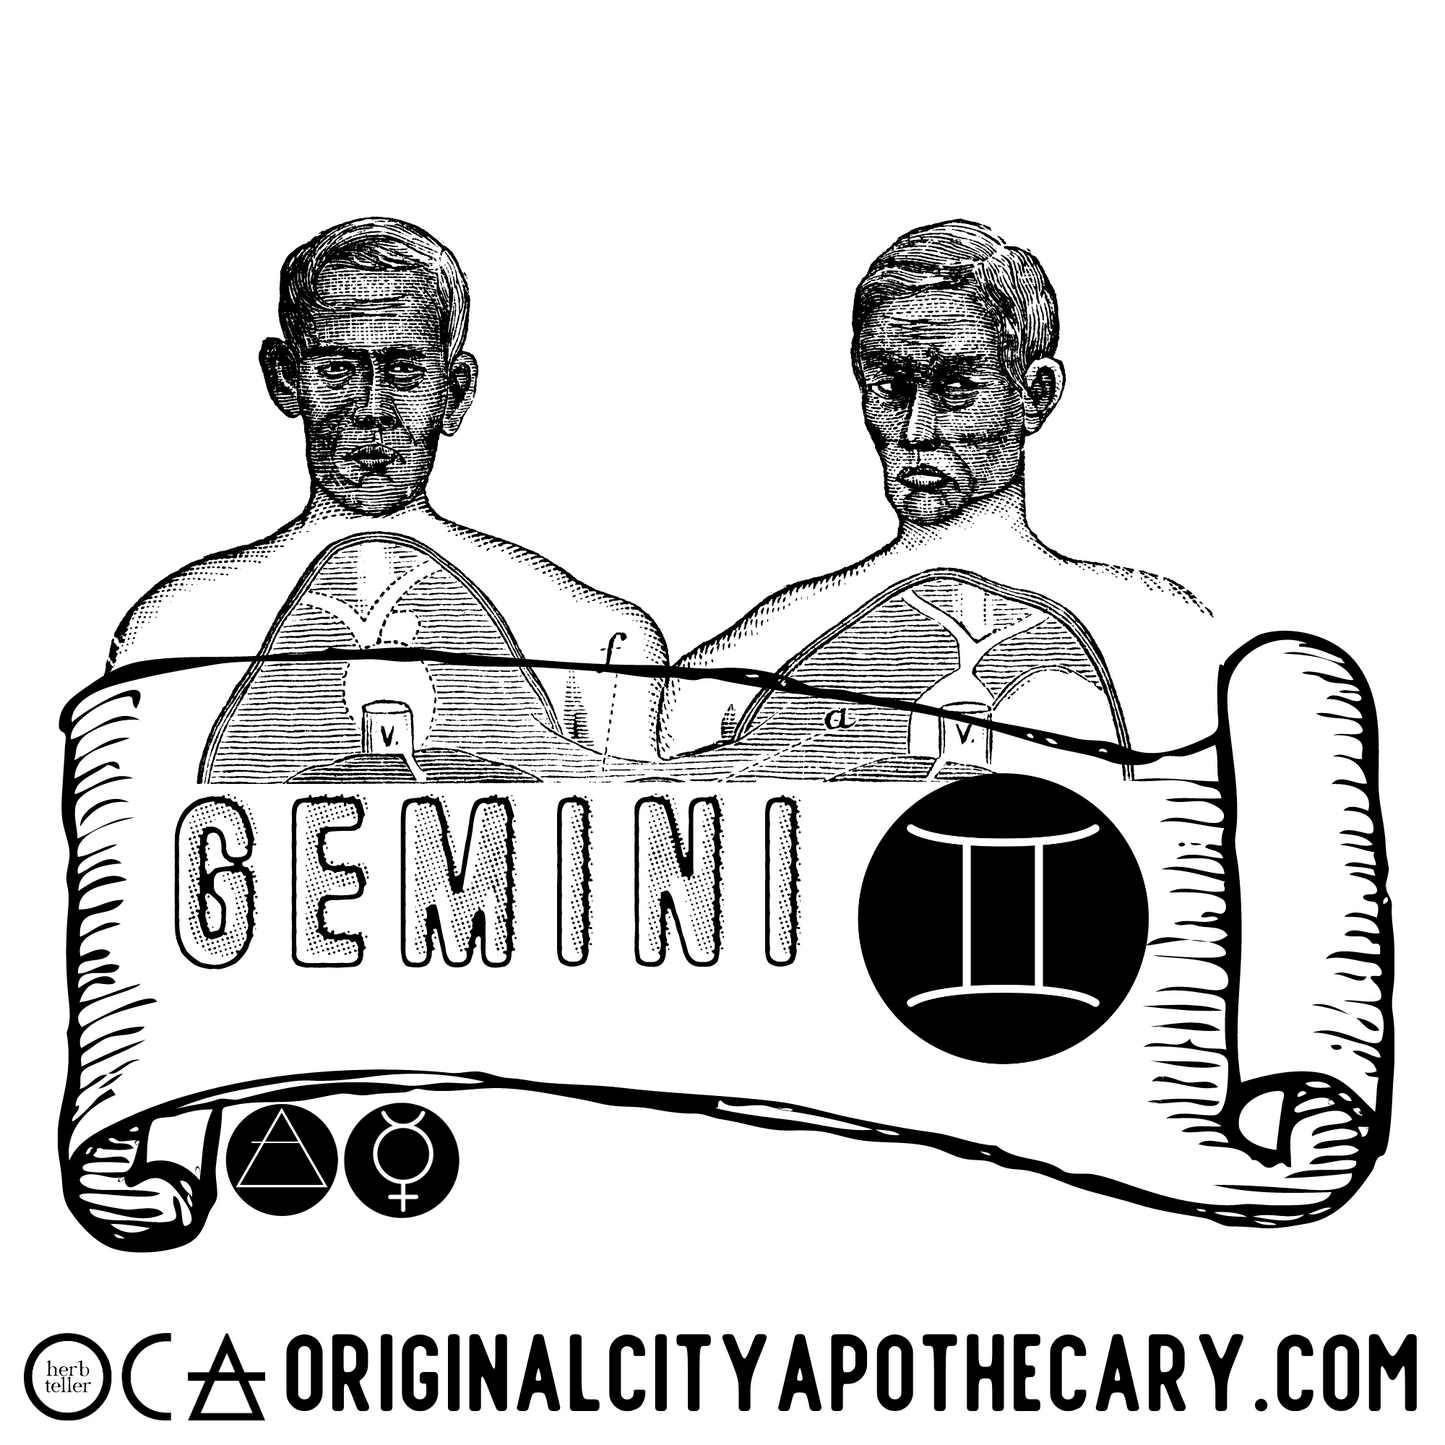 Gemini Oil/Perfume